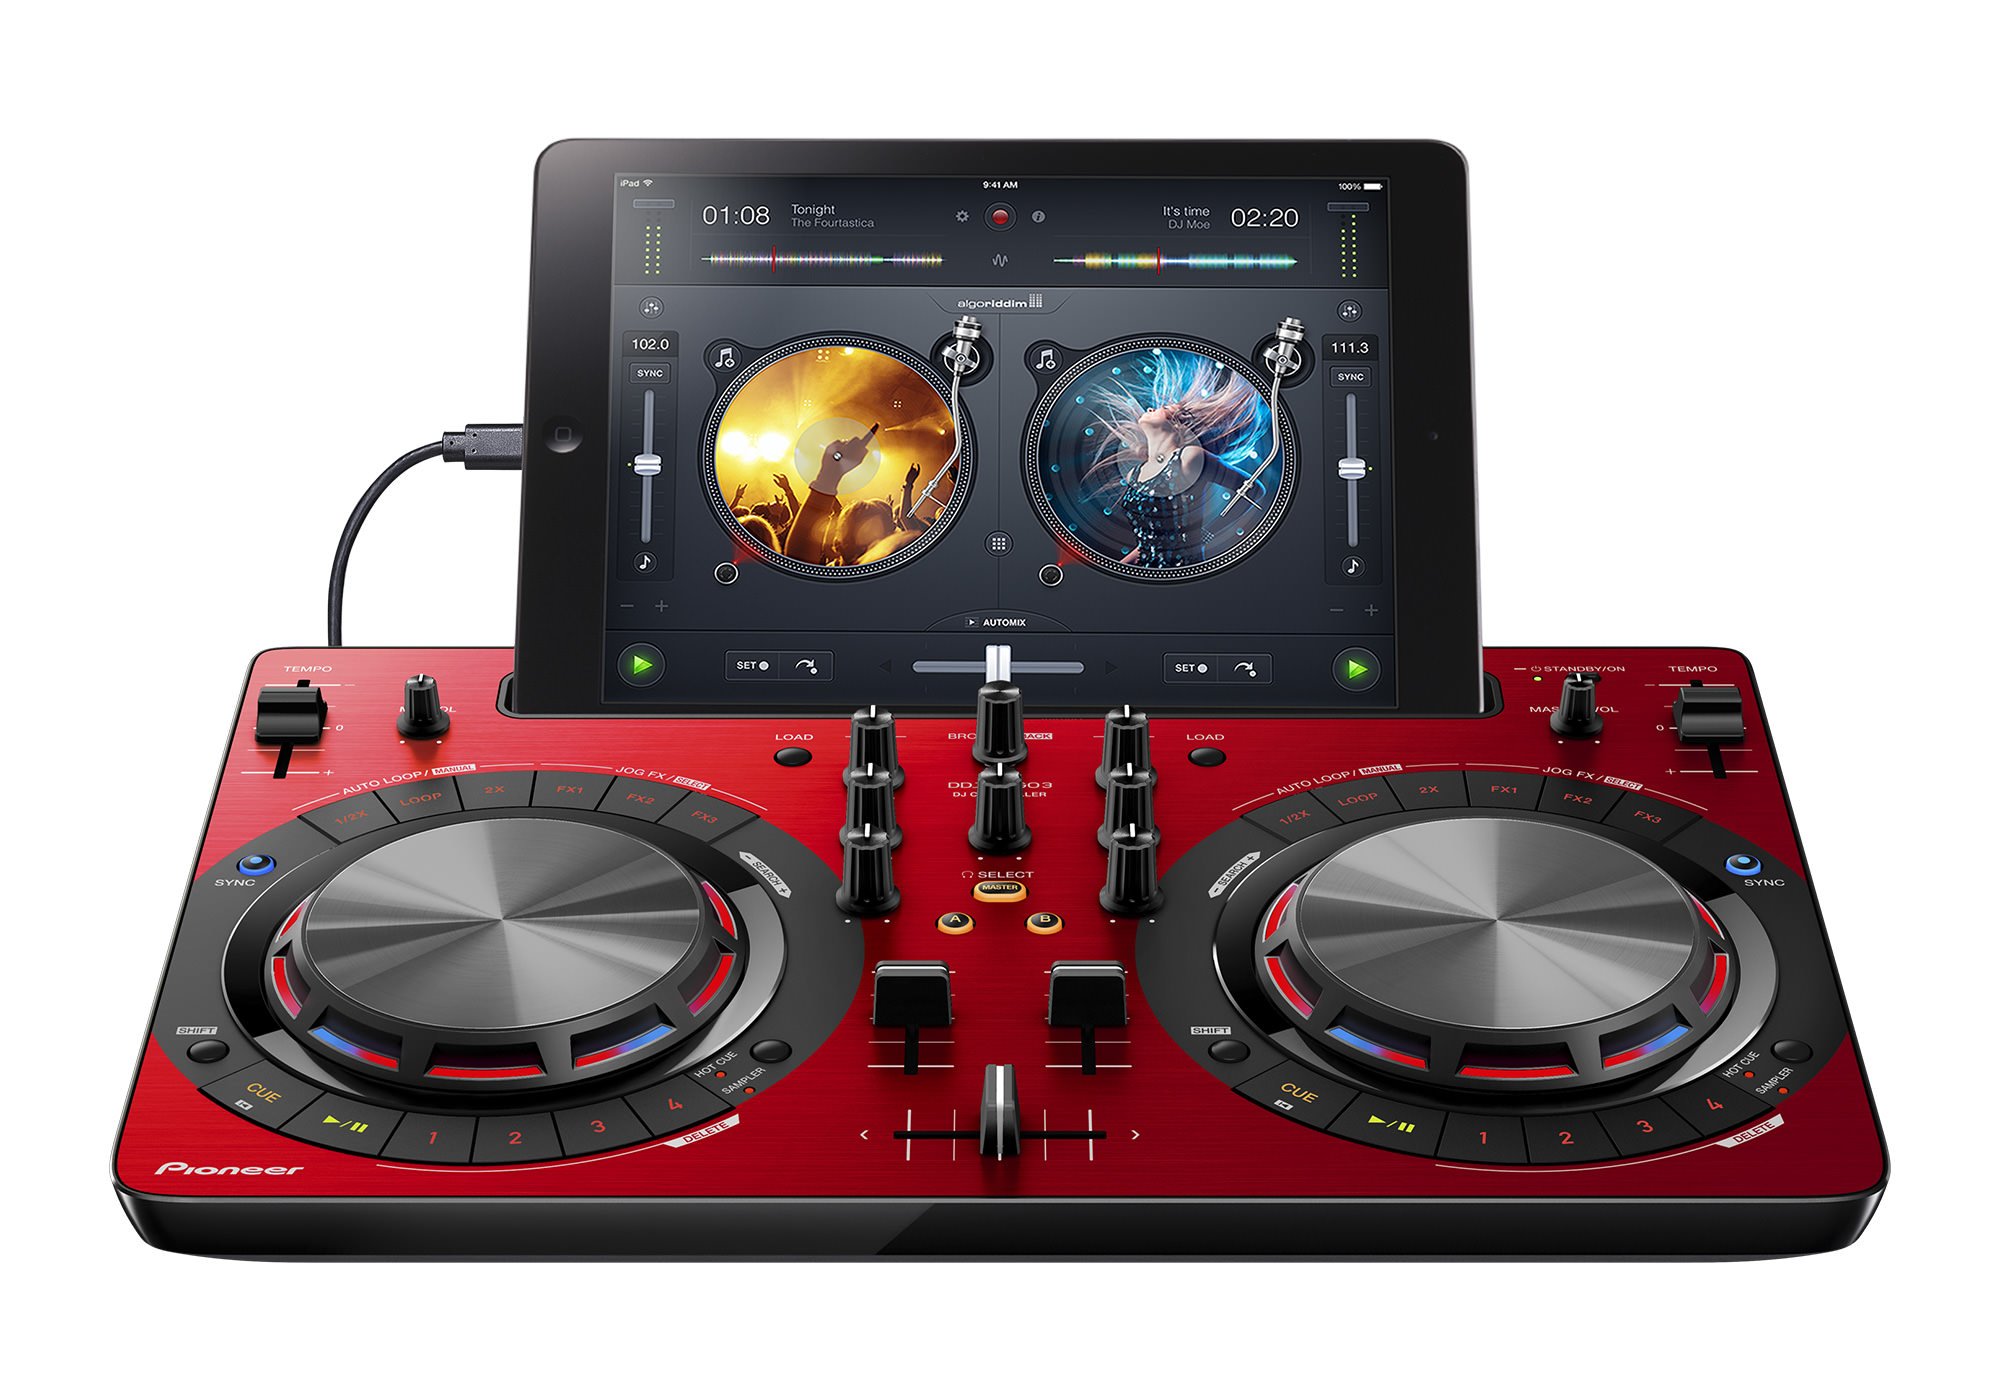 Pioneer DDJ-WeGO3 Red DJ Controller for iPad